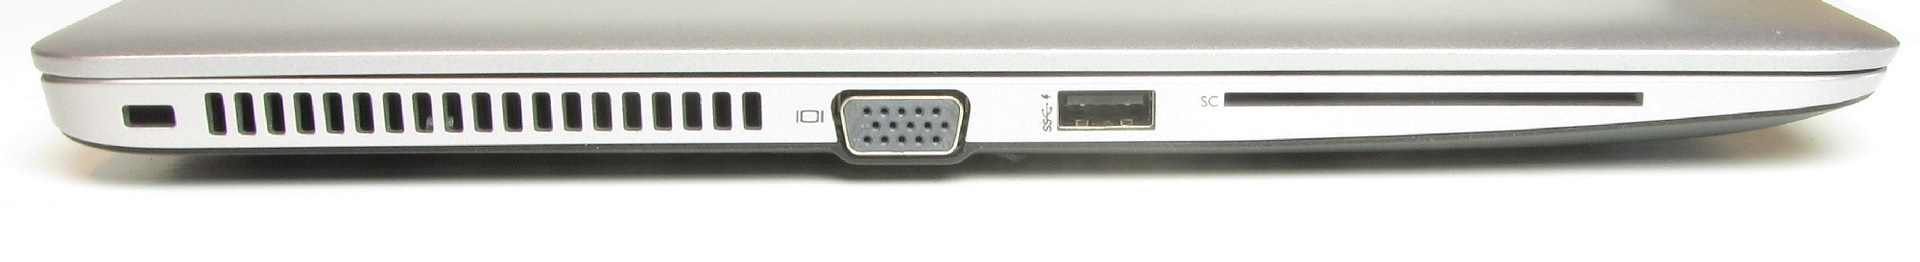 لپ‌تاپ استوک HP مدل EliteBook 850 G3 پورت های چپ